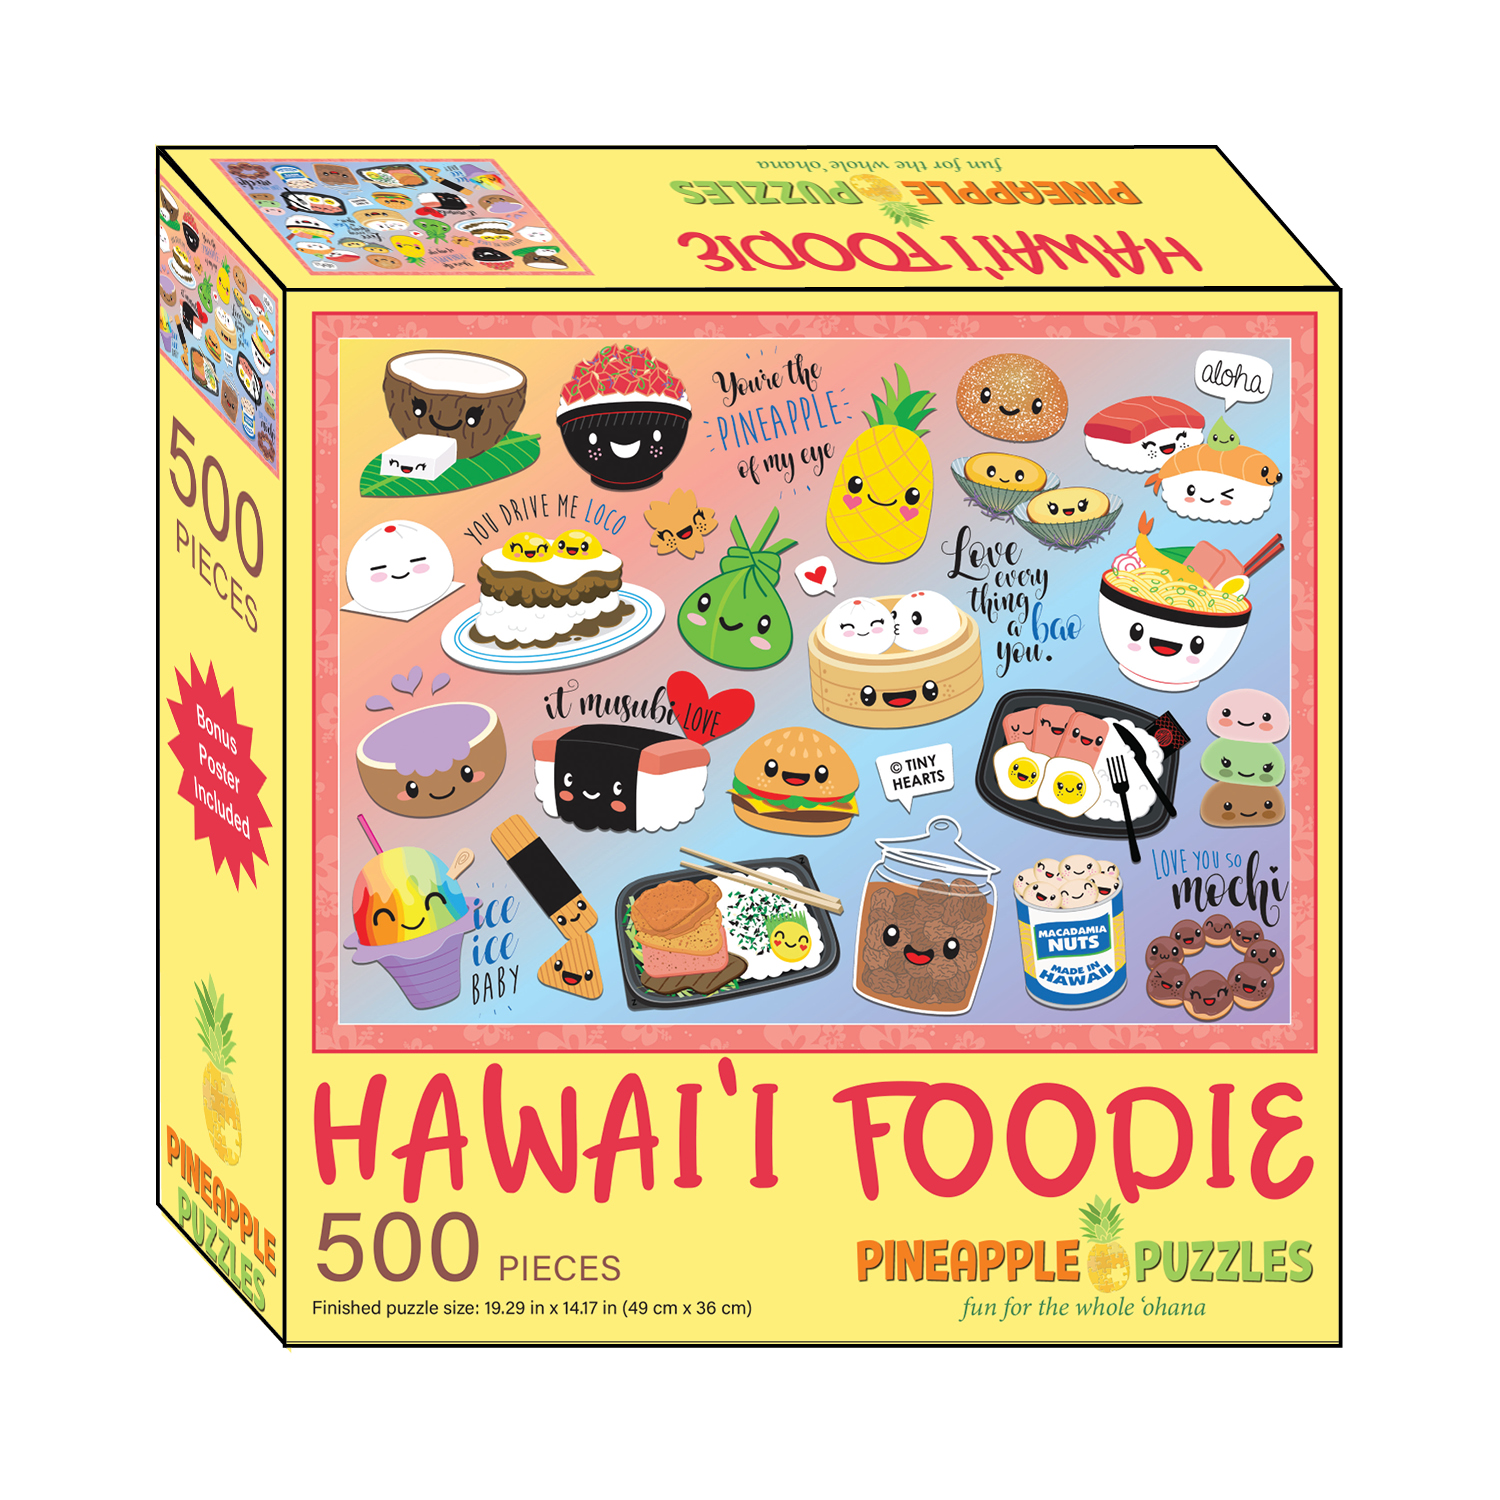 https://mutualpublishing.com/wp-content/uploads/2022/05/Hawaii-Foodie-box.jpg